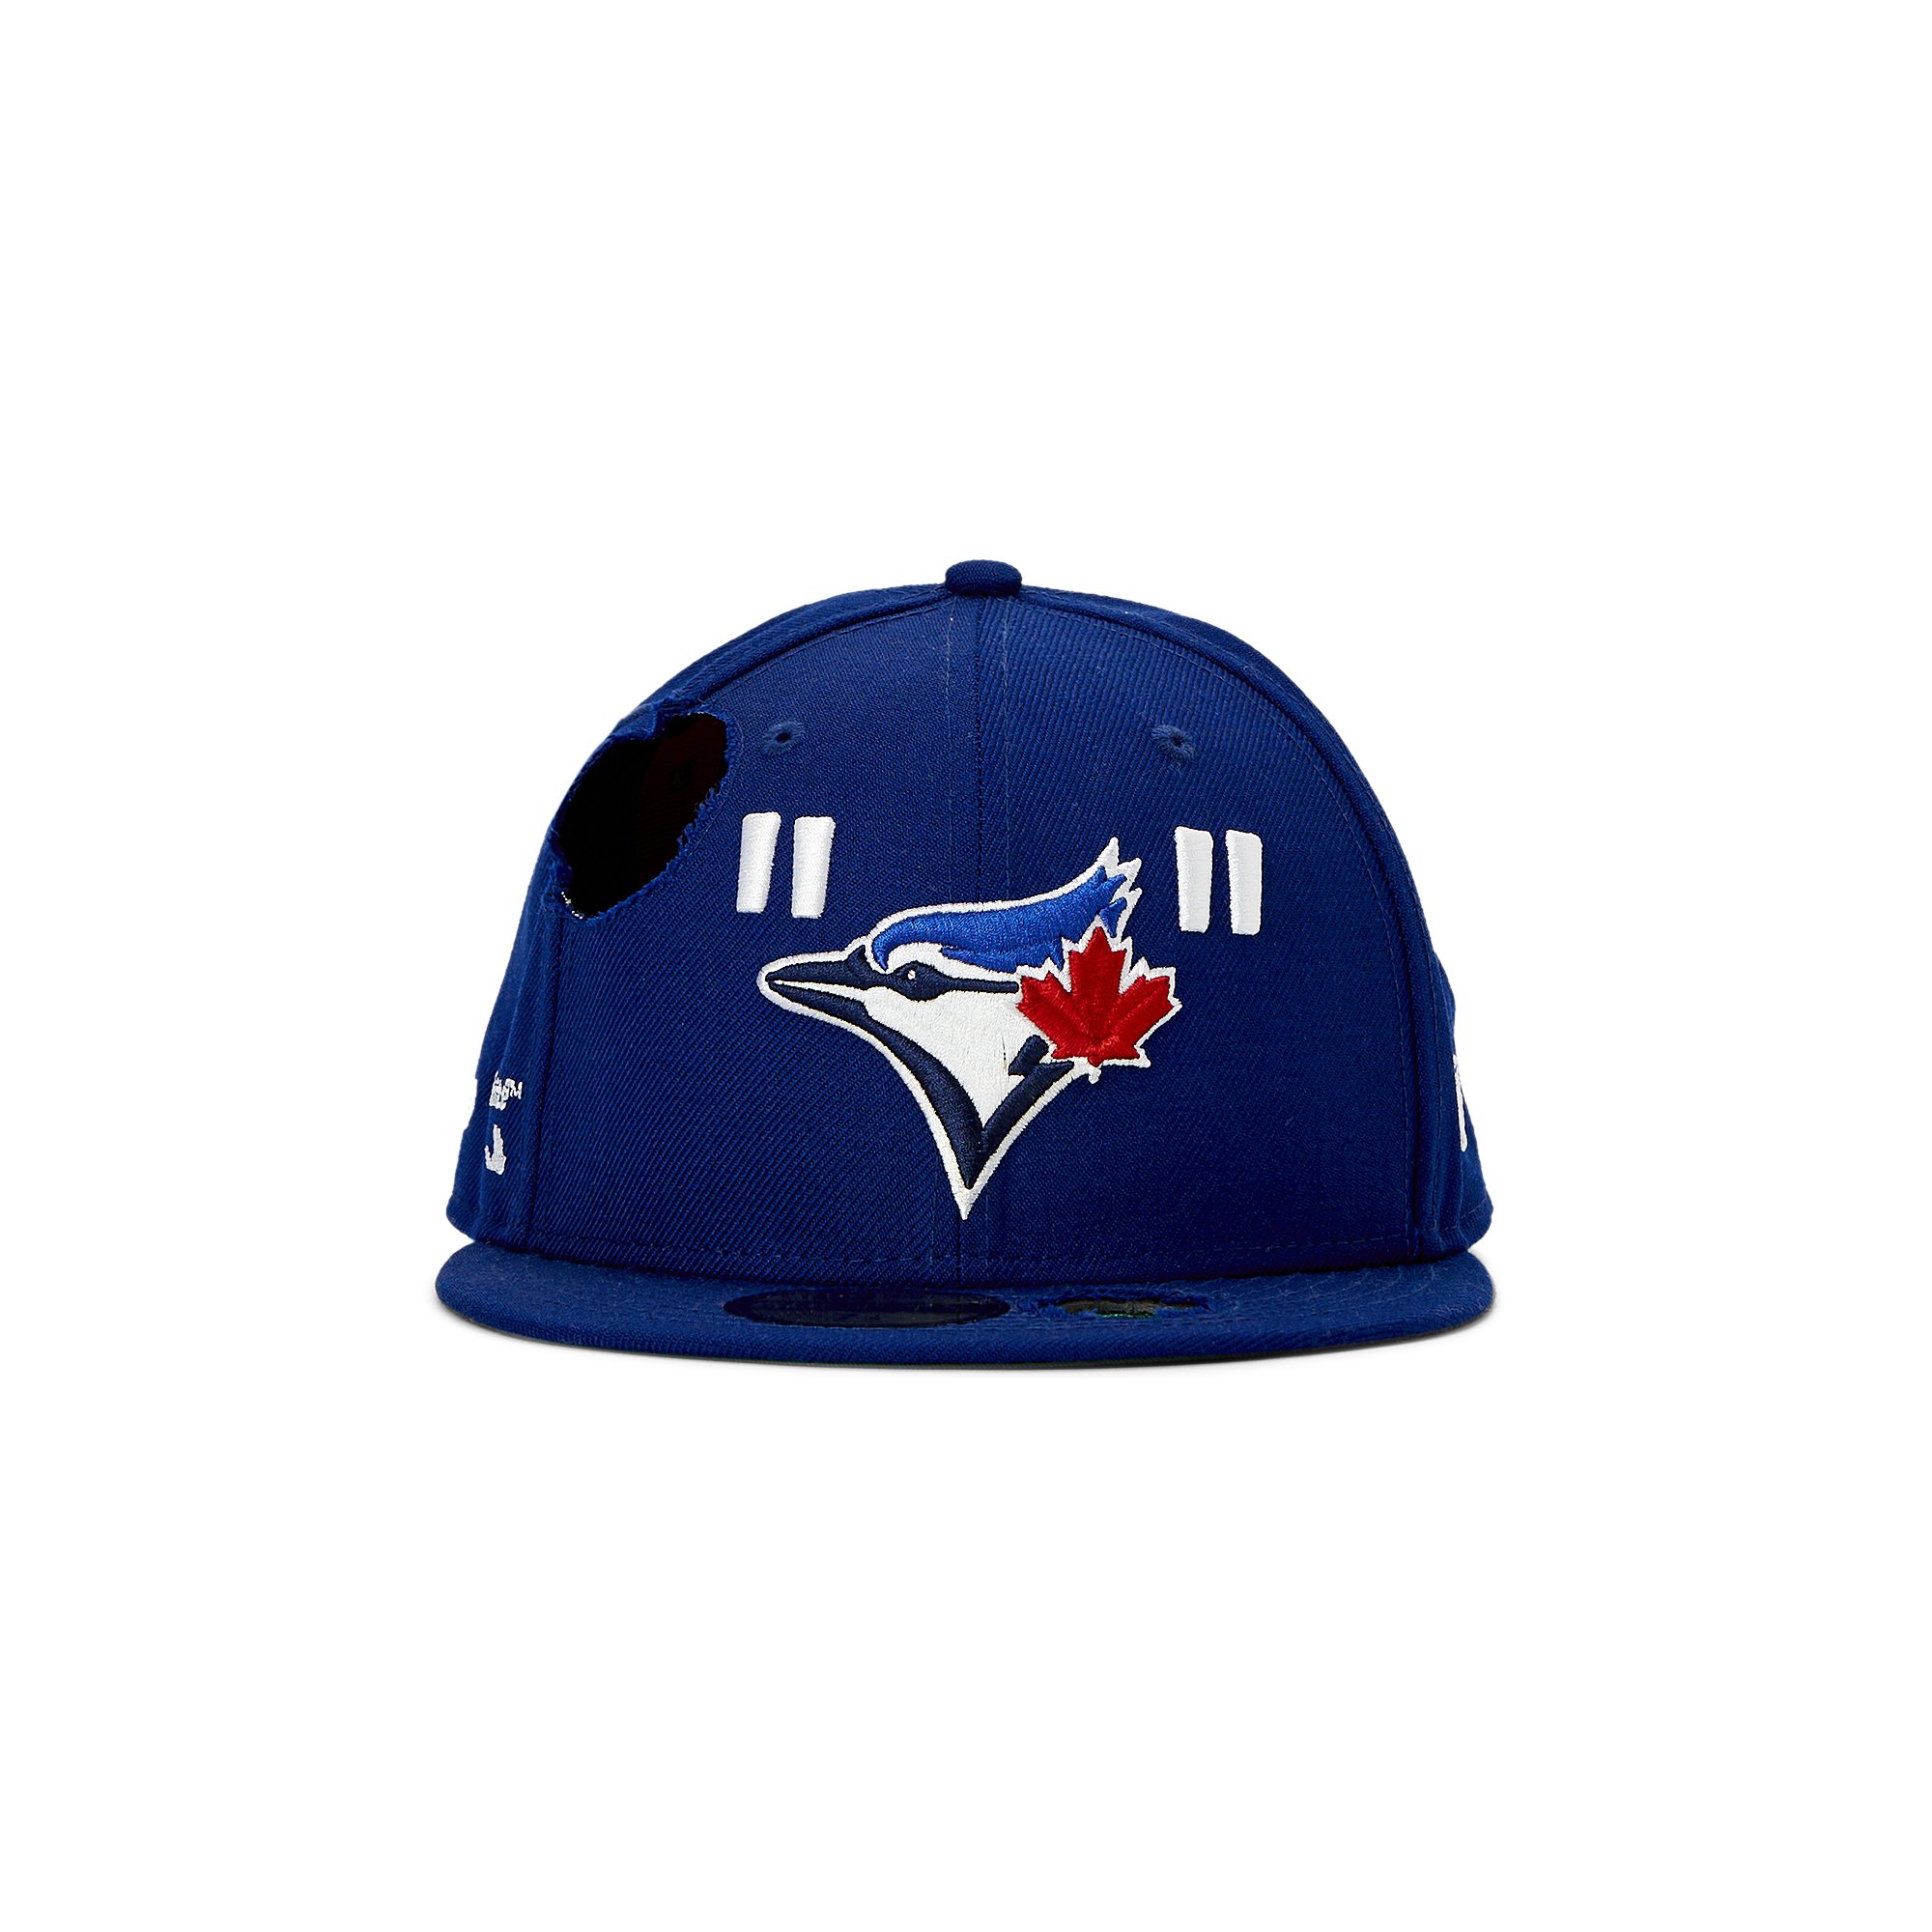 Off-White x MLB Toronto Blue Jays Cap 'Blue/Red' | GOAT